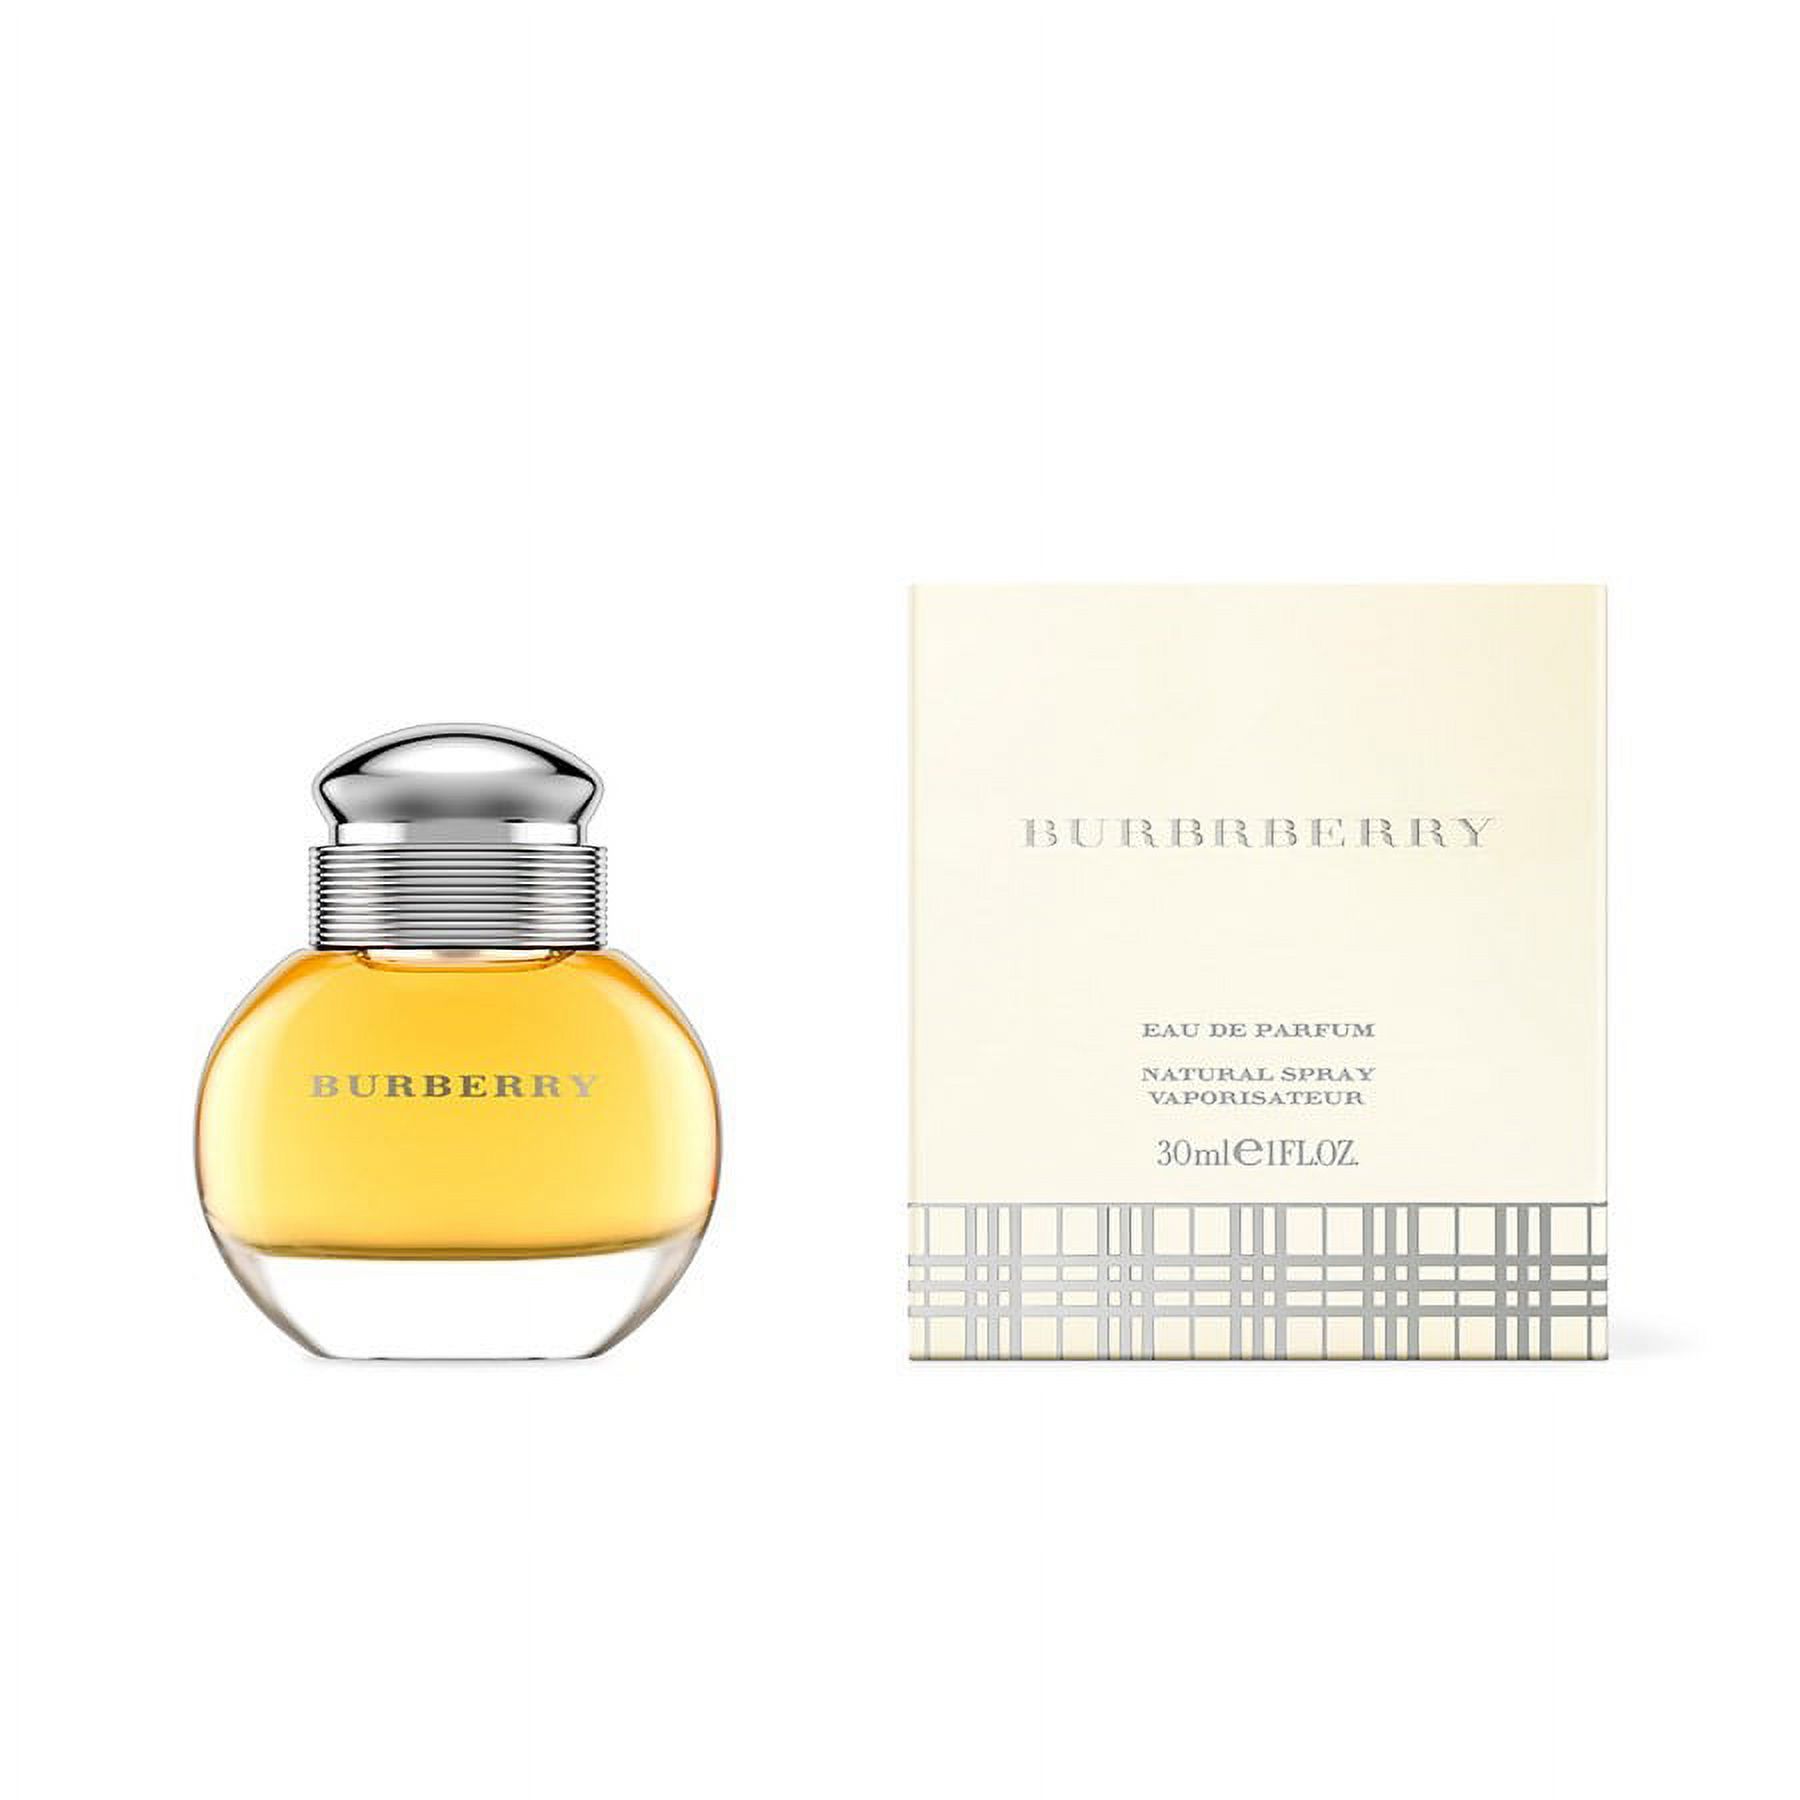 Burberry Classic Eau de Parfum, Perfume for Women, 1 Oz - image 3 of 3